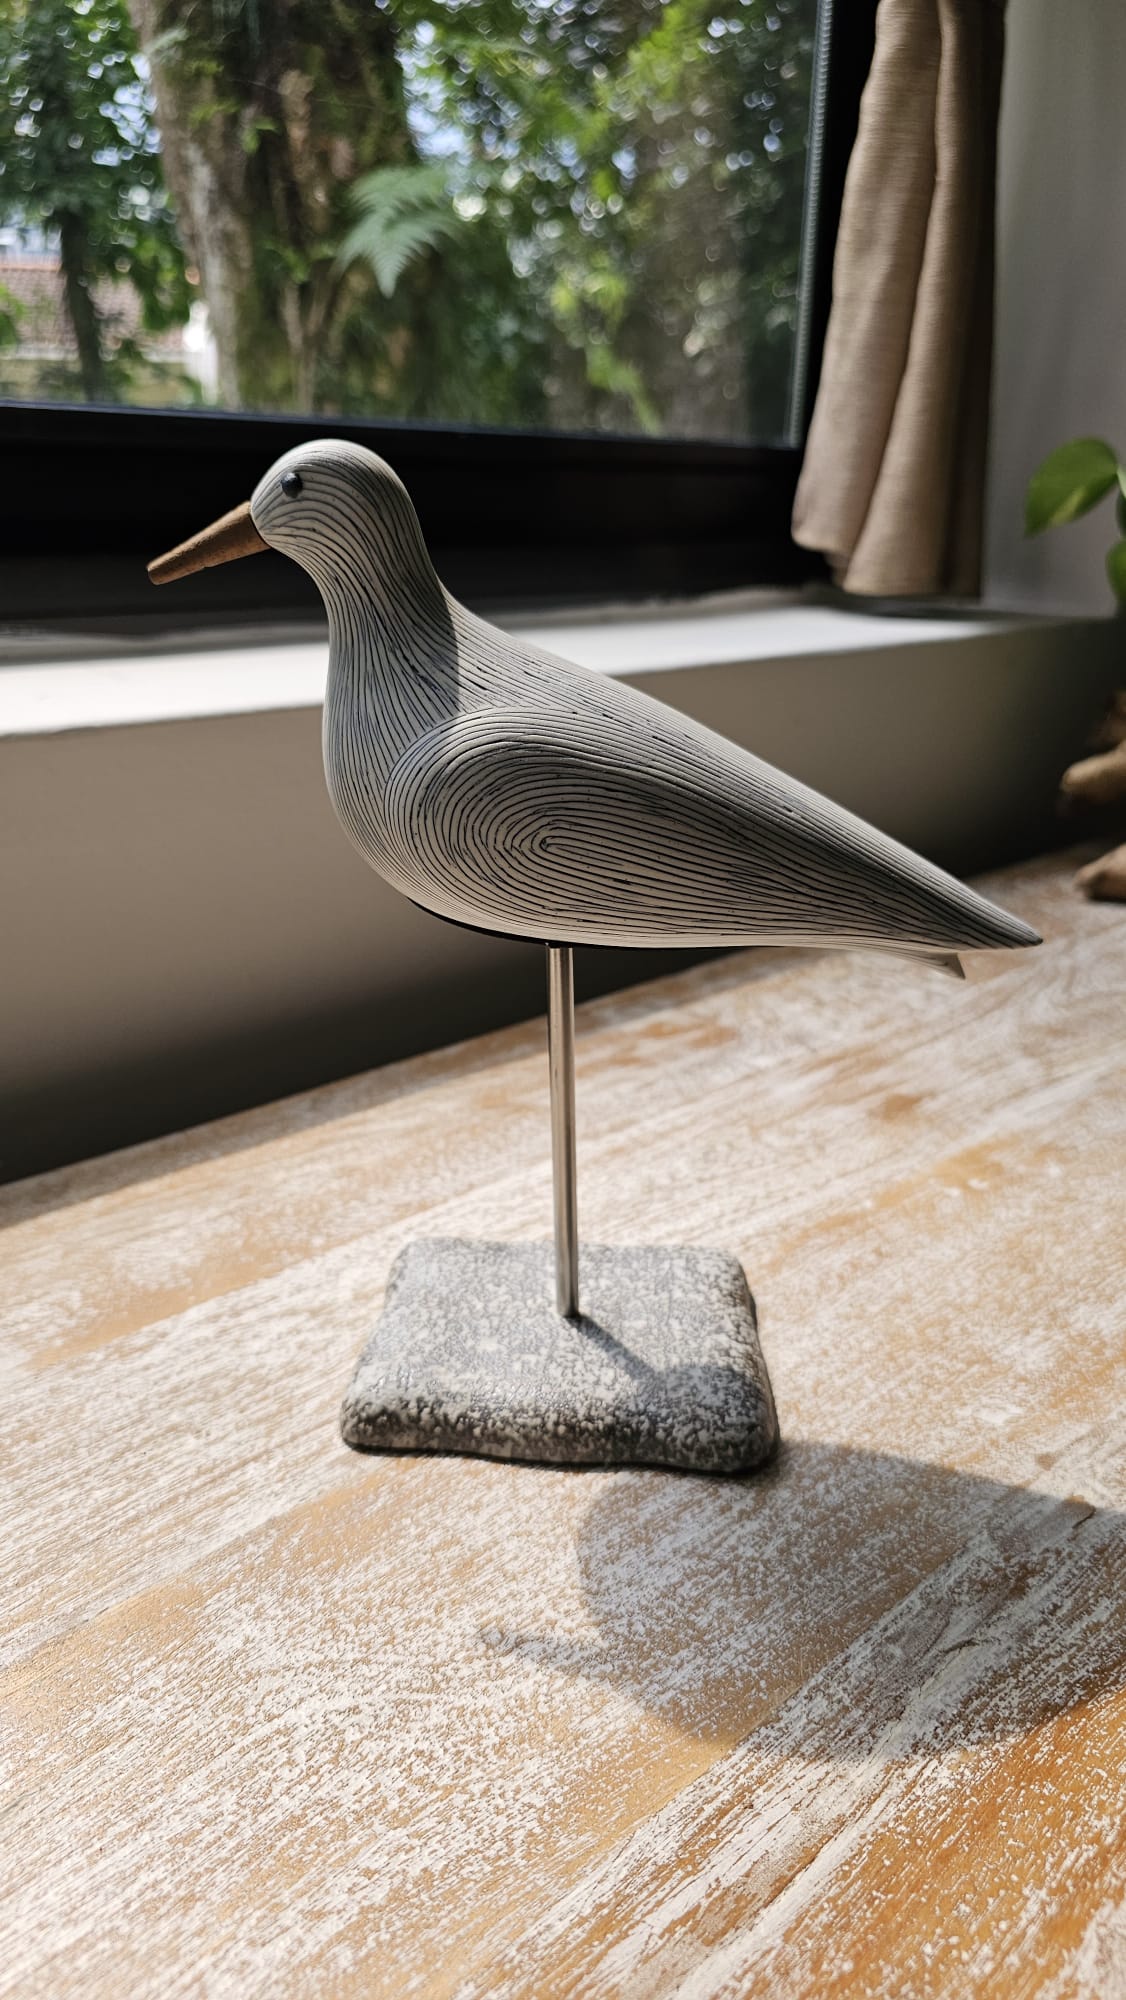 The Bird Stand - Medium